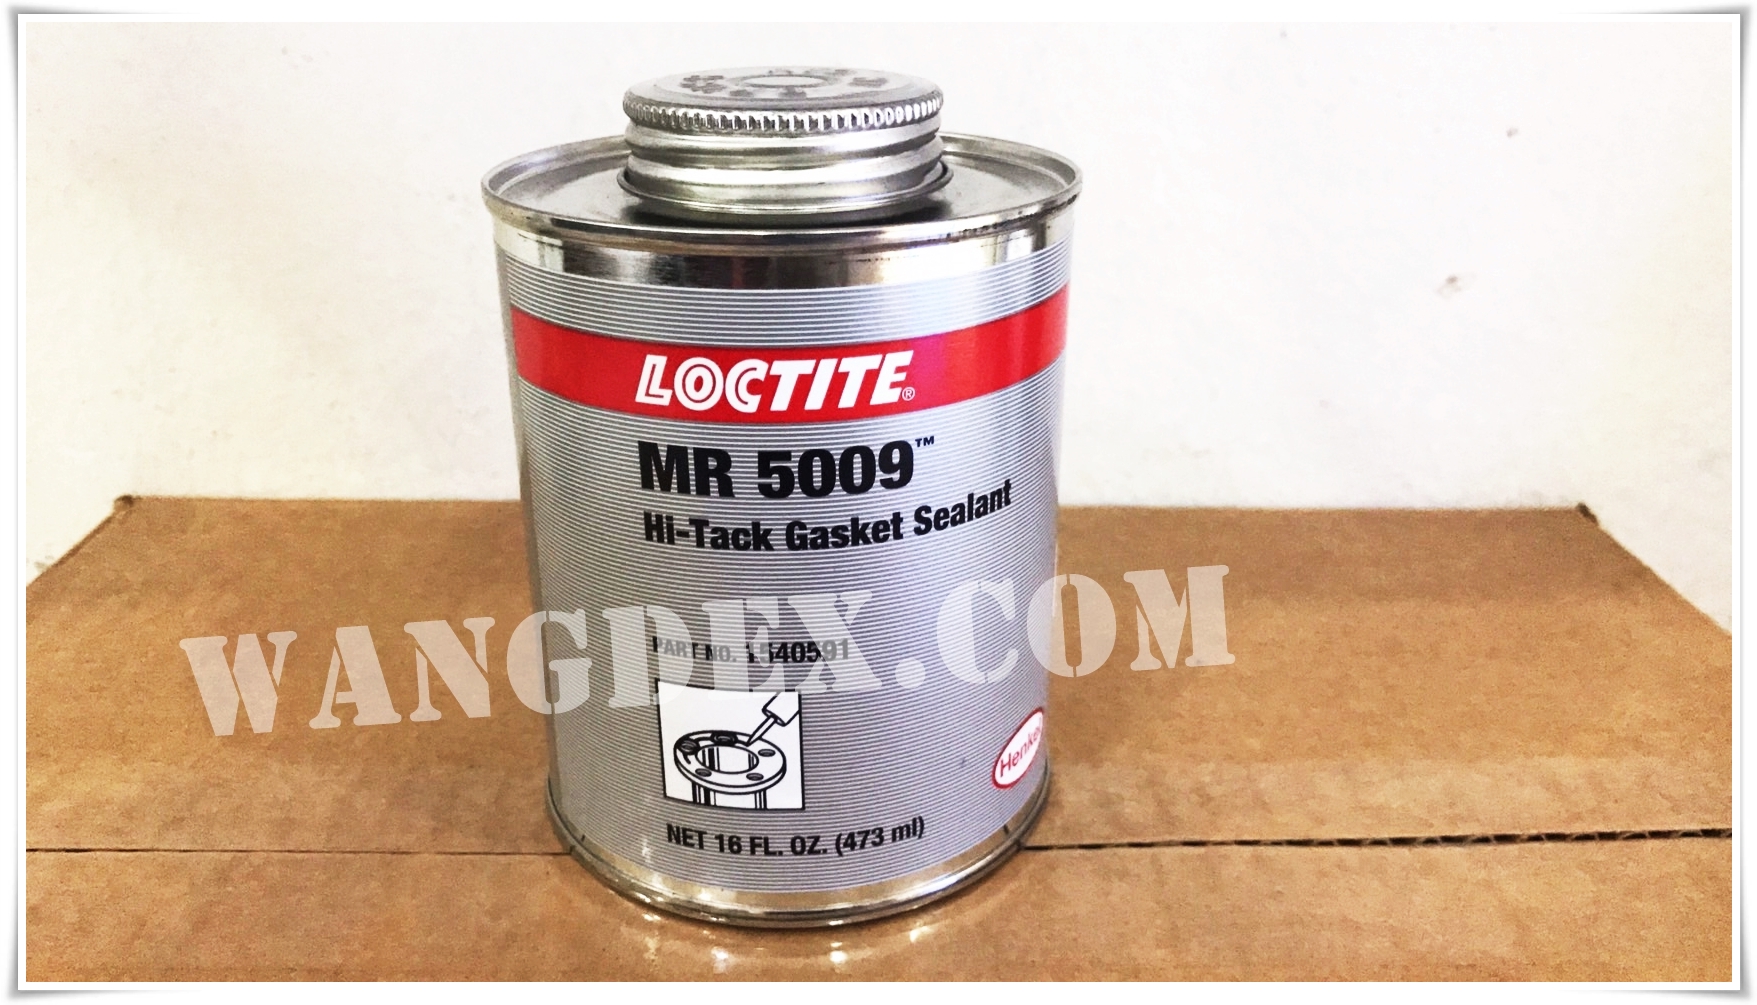 Loctite MR 5009 Hi-Tack Gasket Sealant 